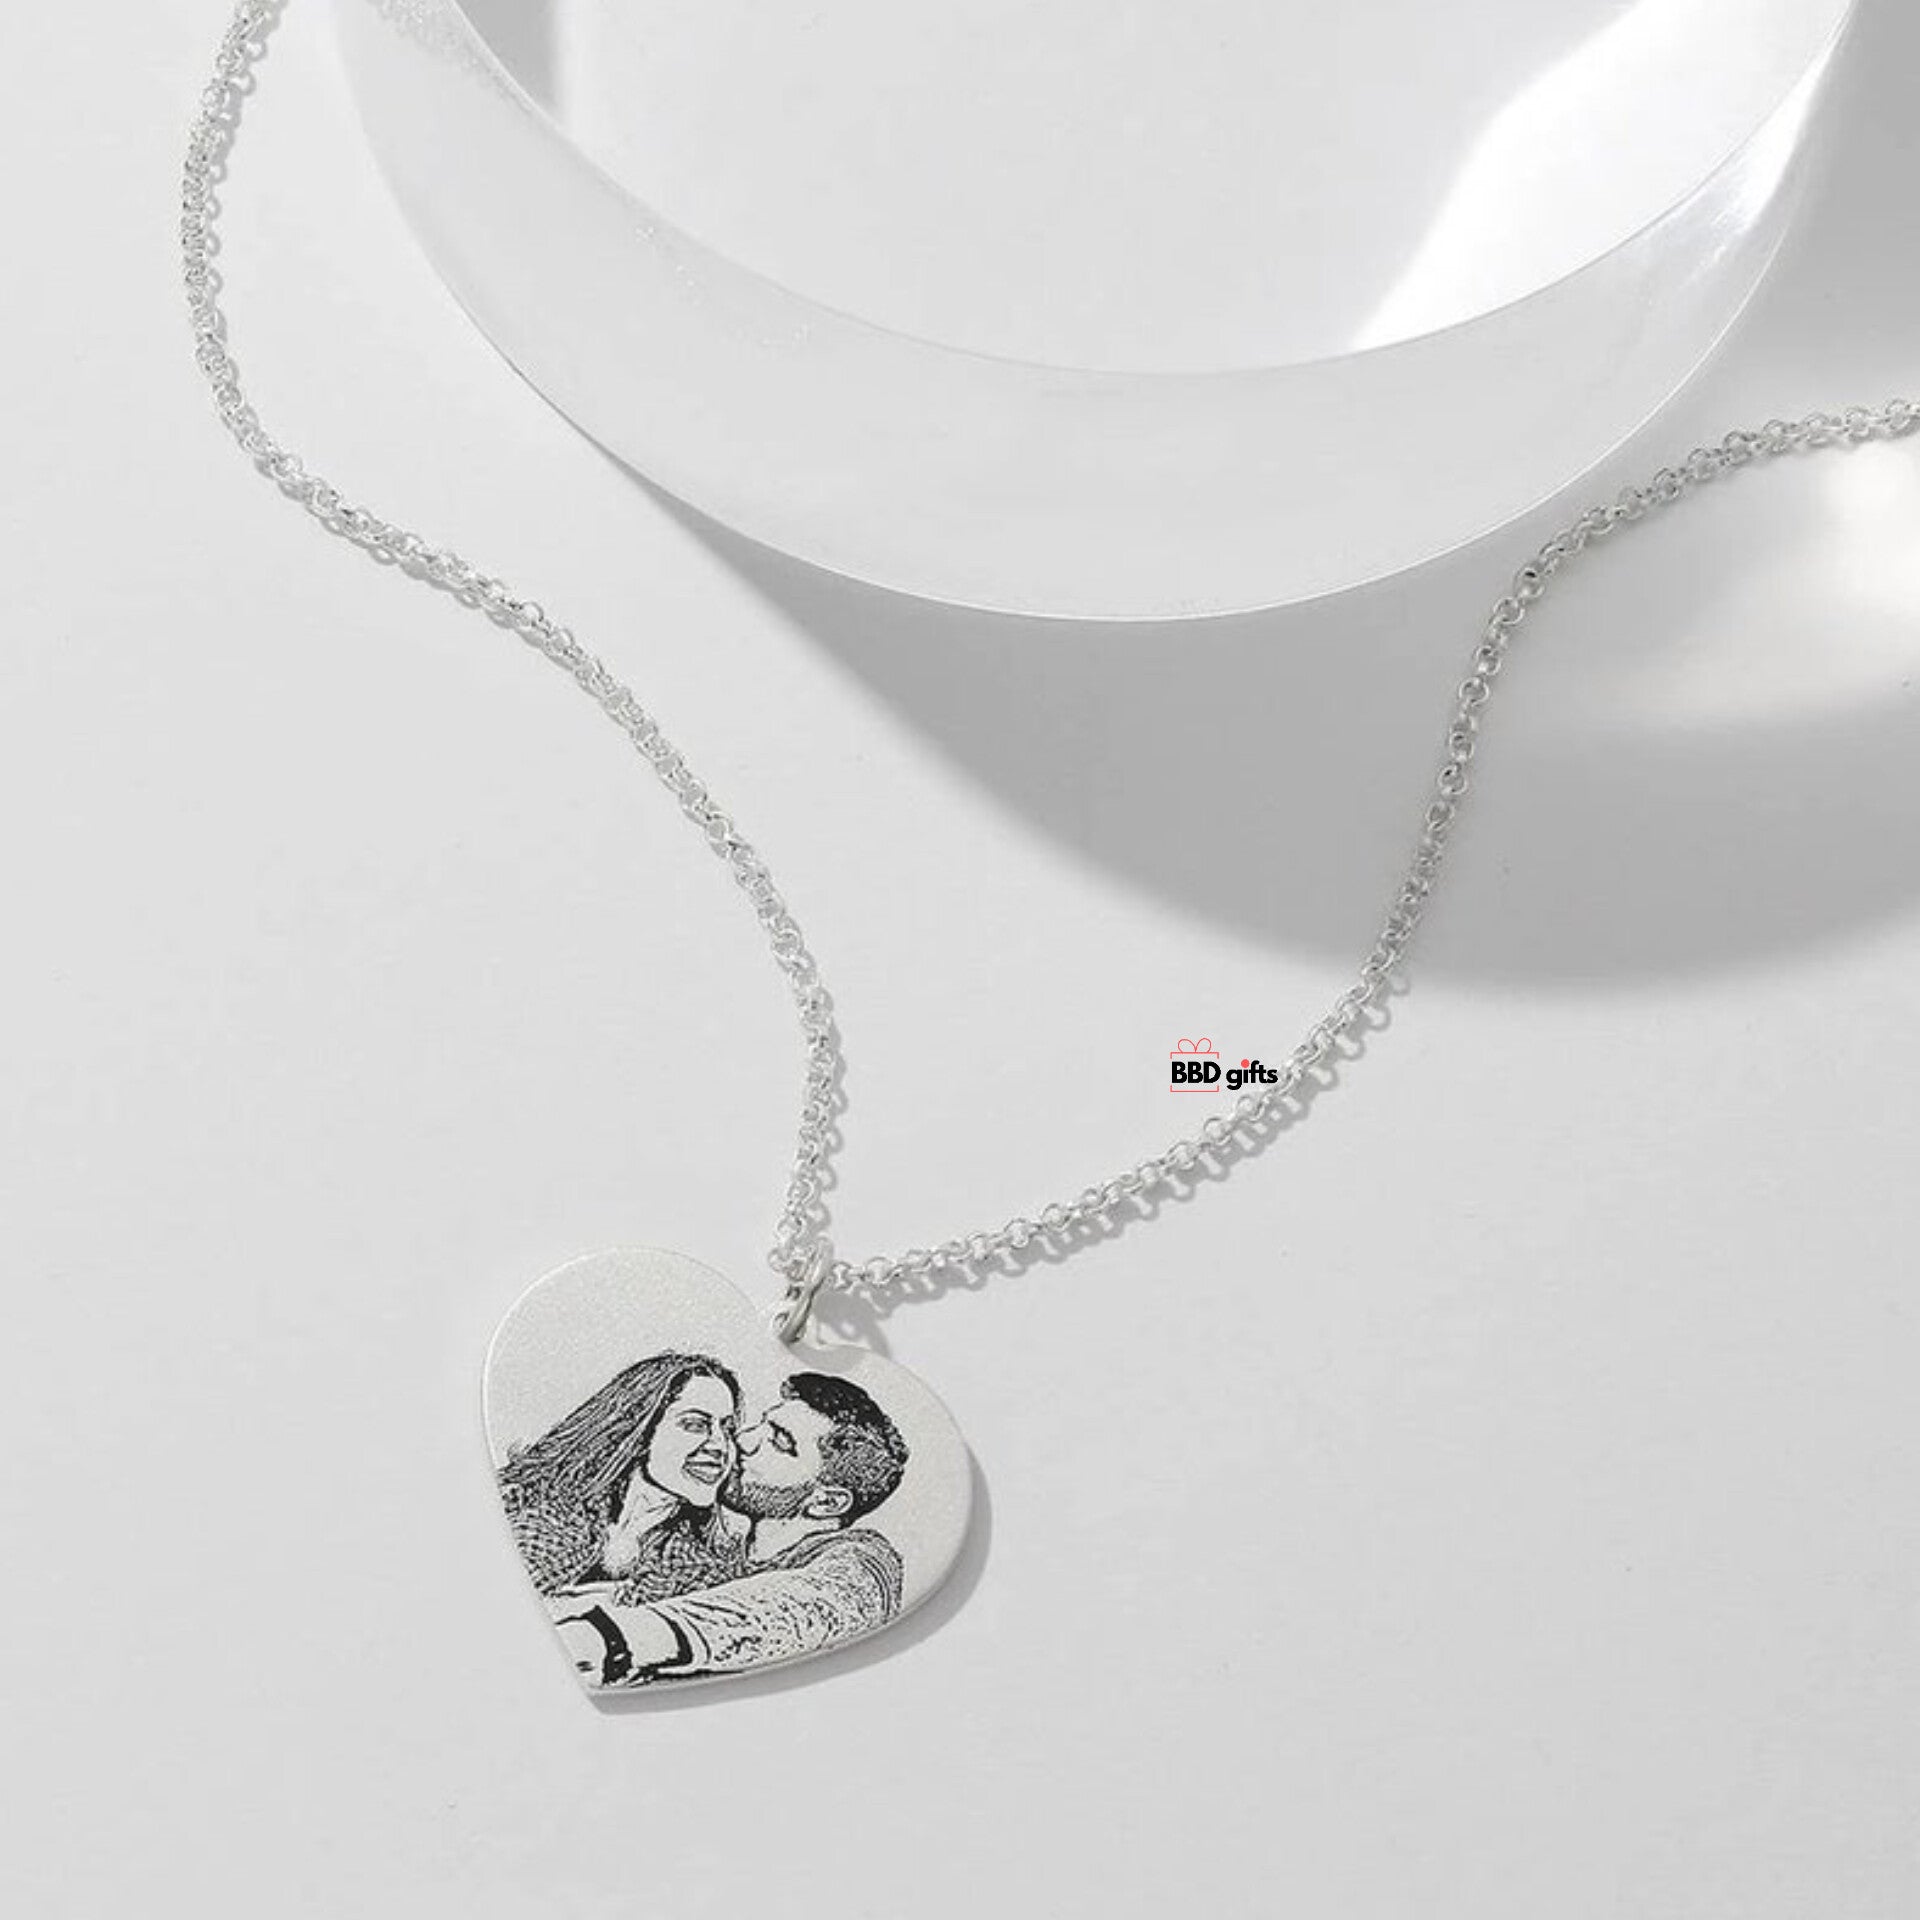 ESPRIT - Engraved pendant necklace, sterling silver at our online shop